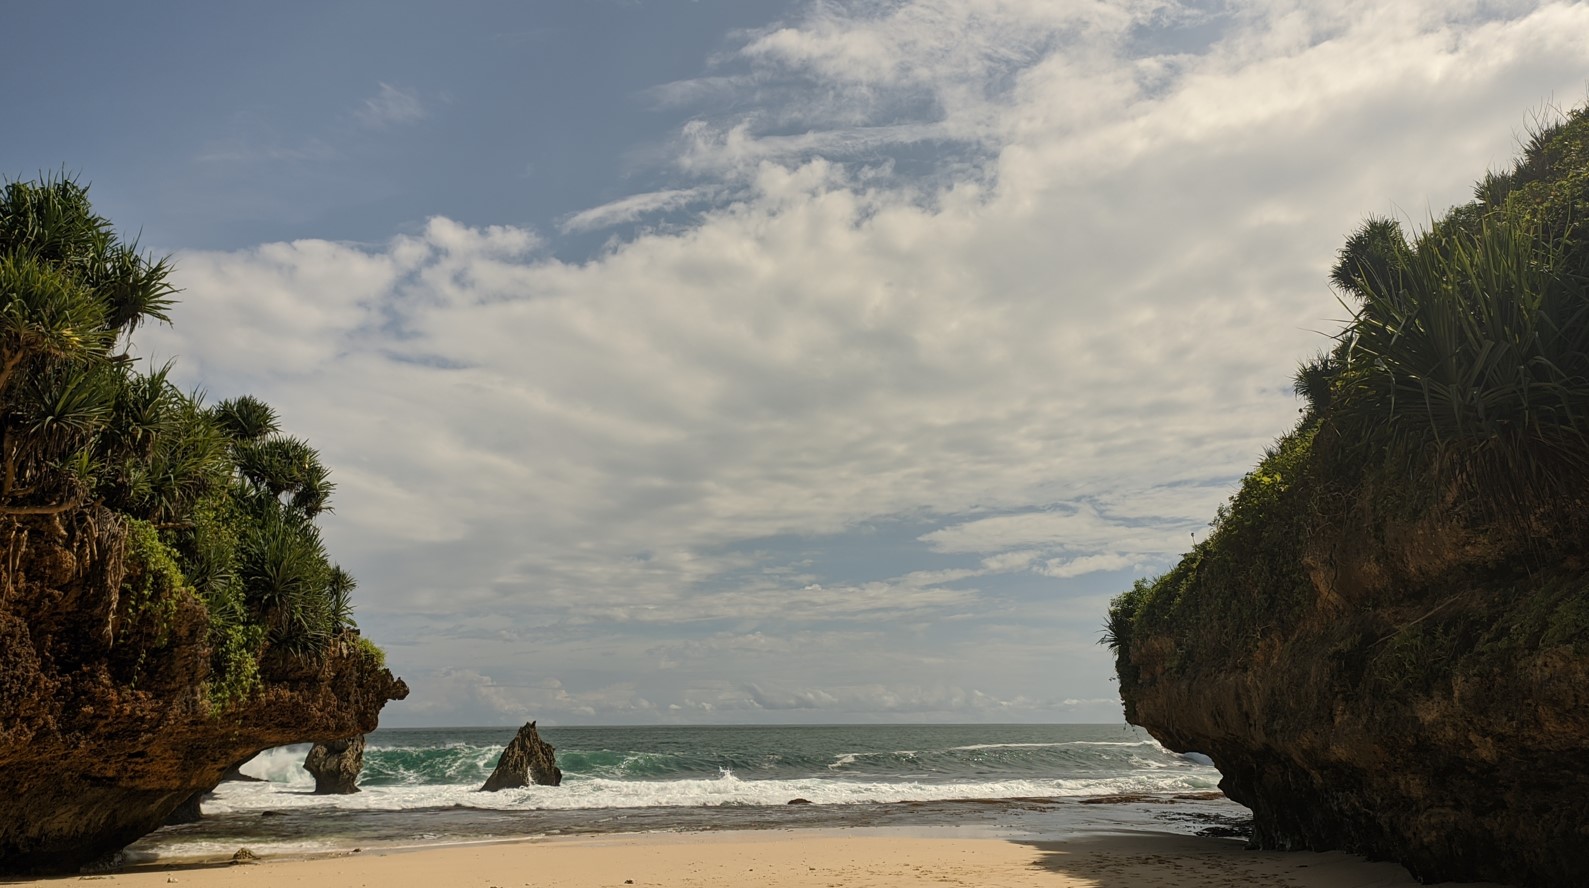 Pesona Keindahan Wisata Pantai Srakung di Girisubo Gunung Kidul Yogyakarta